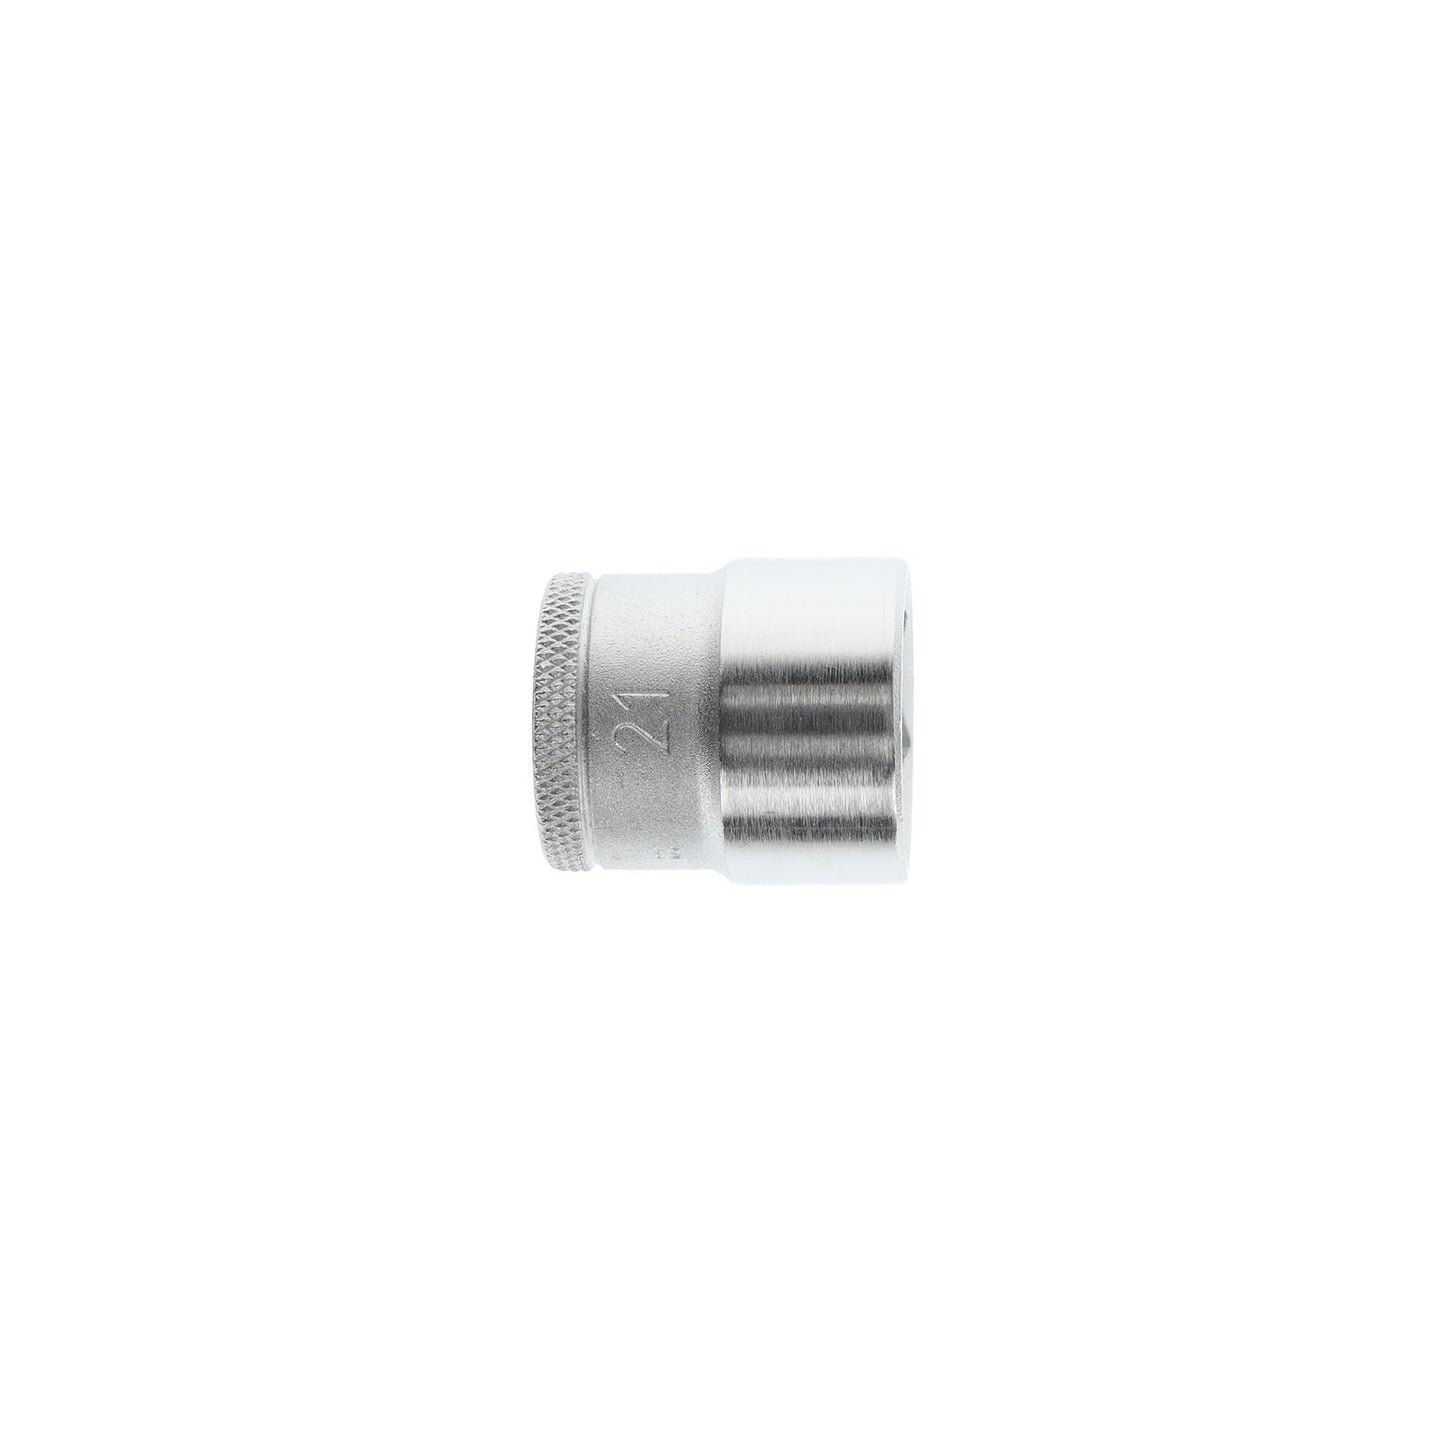 GEDORE 30 21 - Hexagonal socket 3/8", 21 mm (6234900)